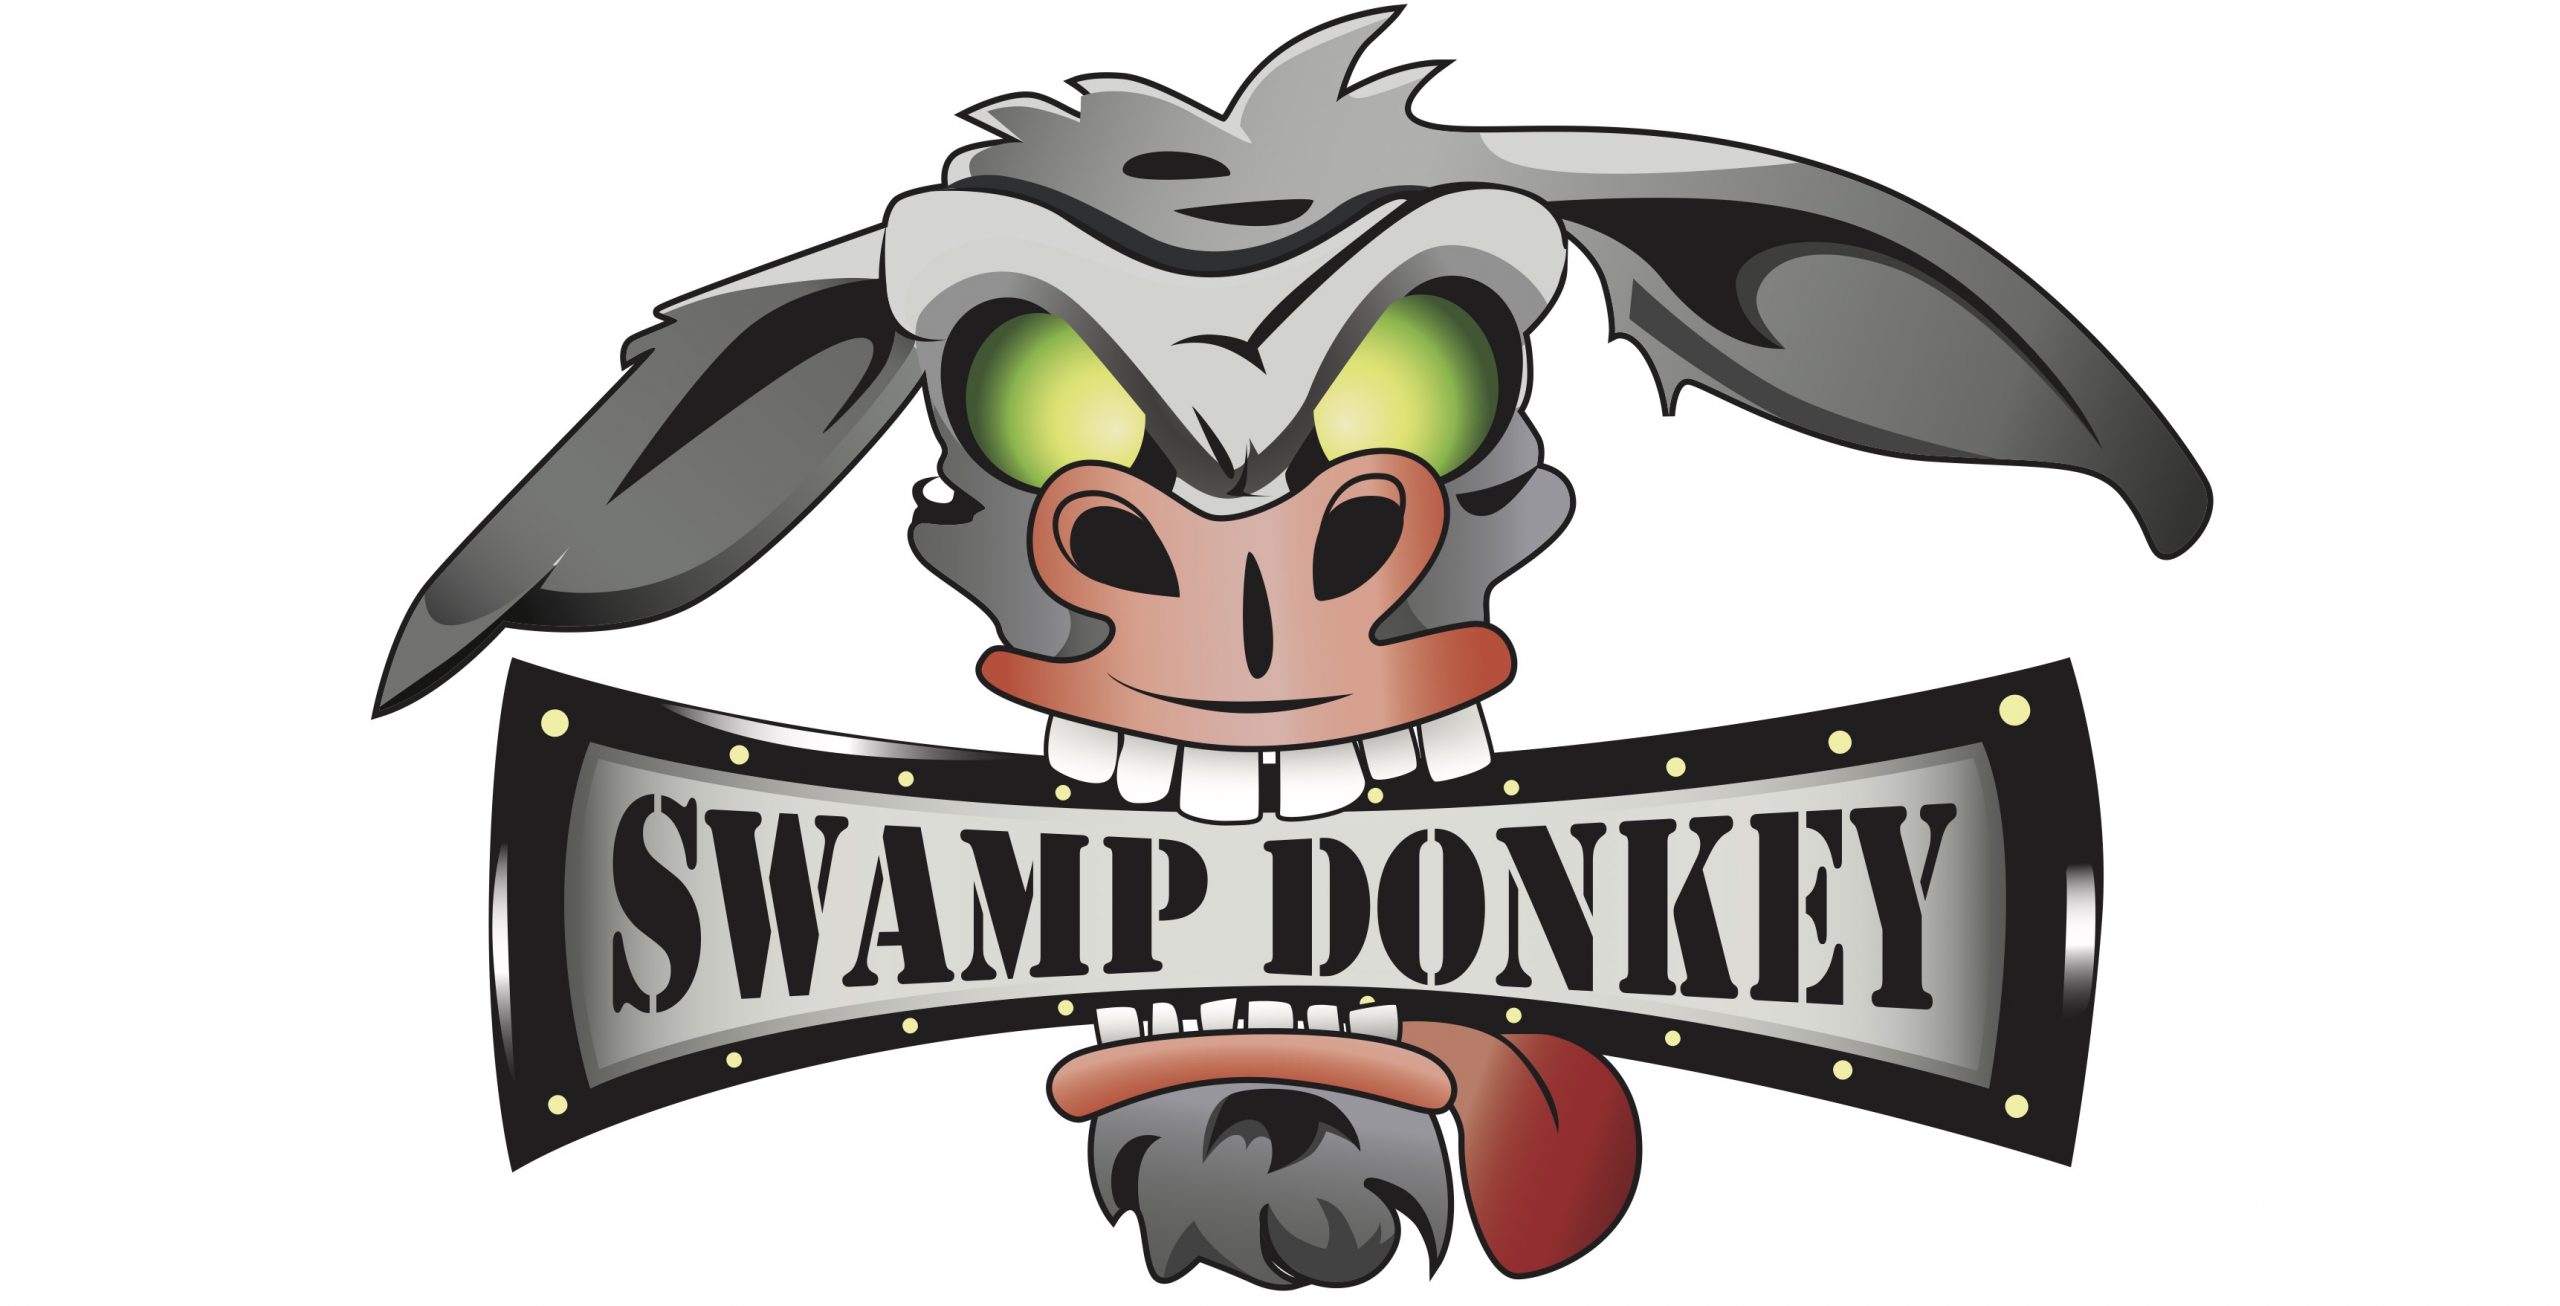 Swamp Donkey Live Music!